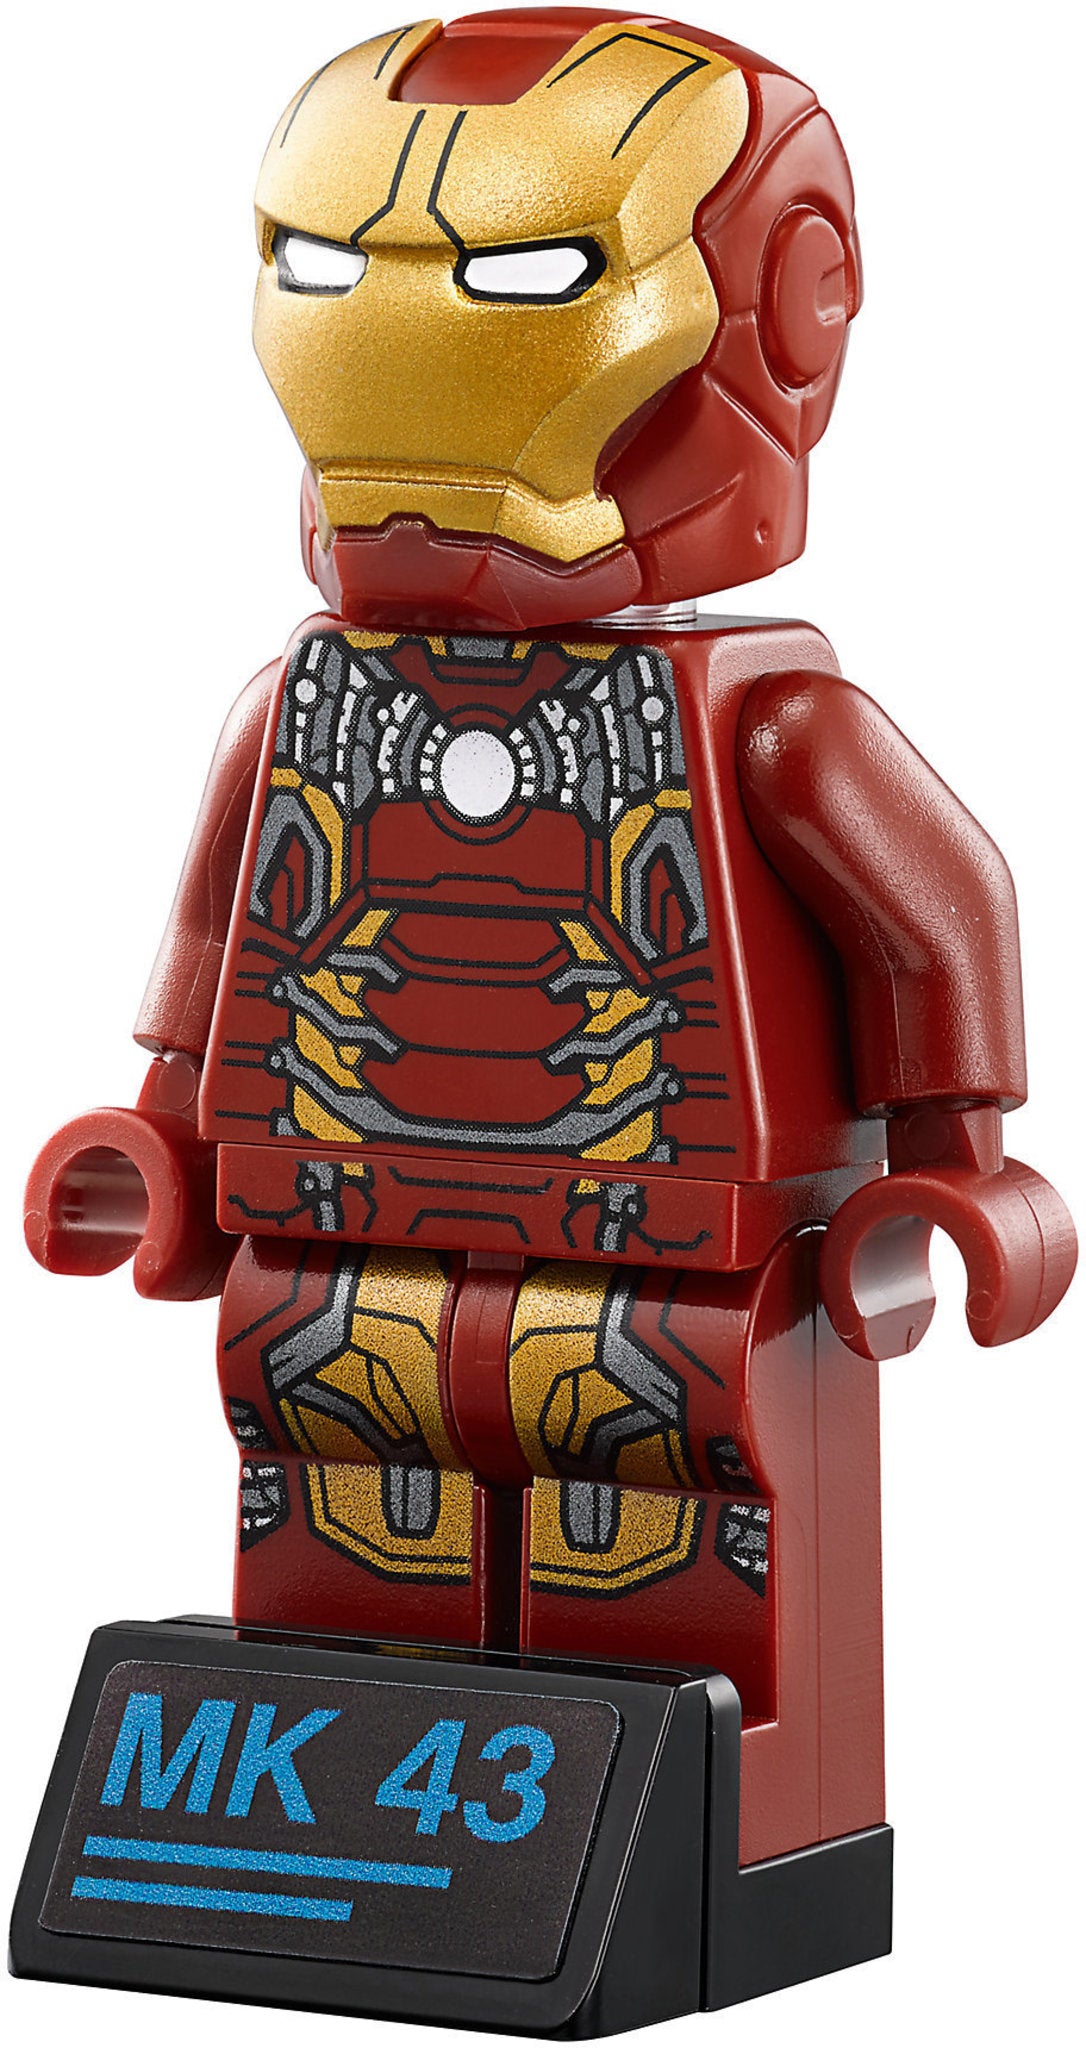 76105 LEGO Marvel Super Heroes - Hulkbuster: Ultron Edition